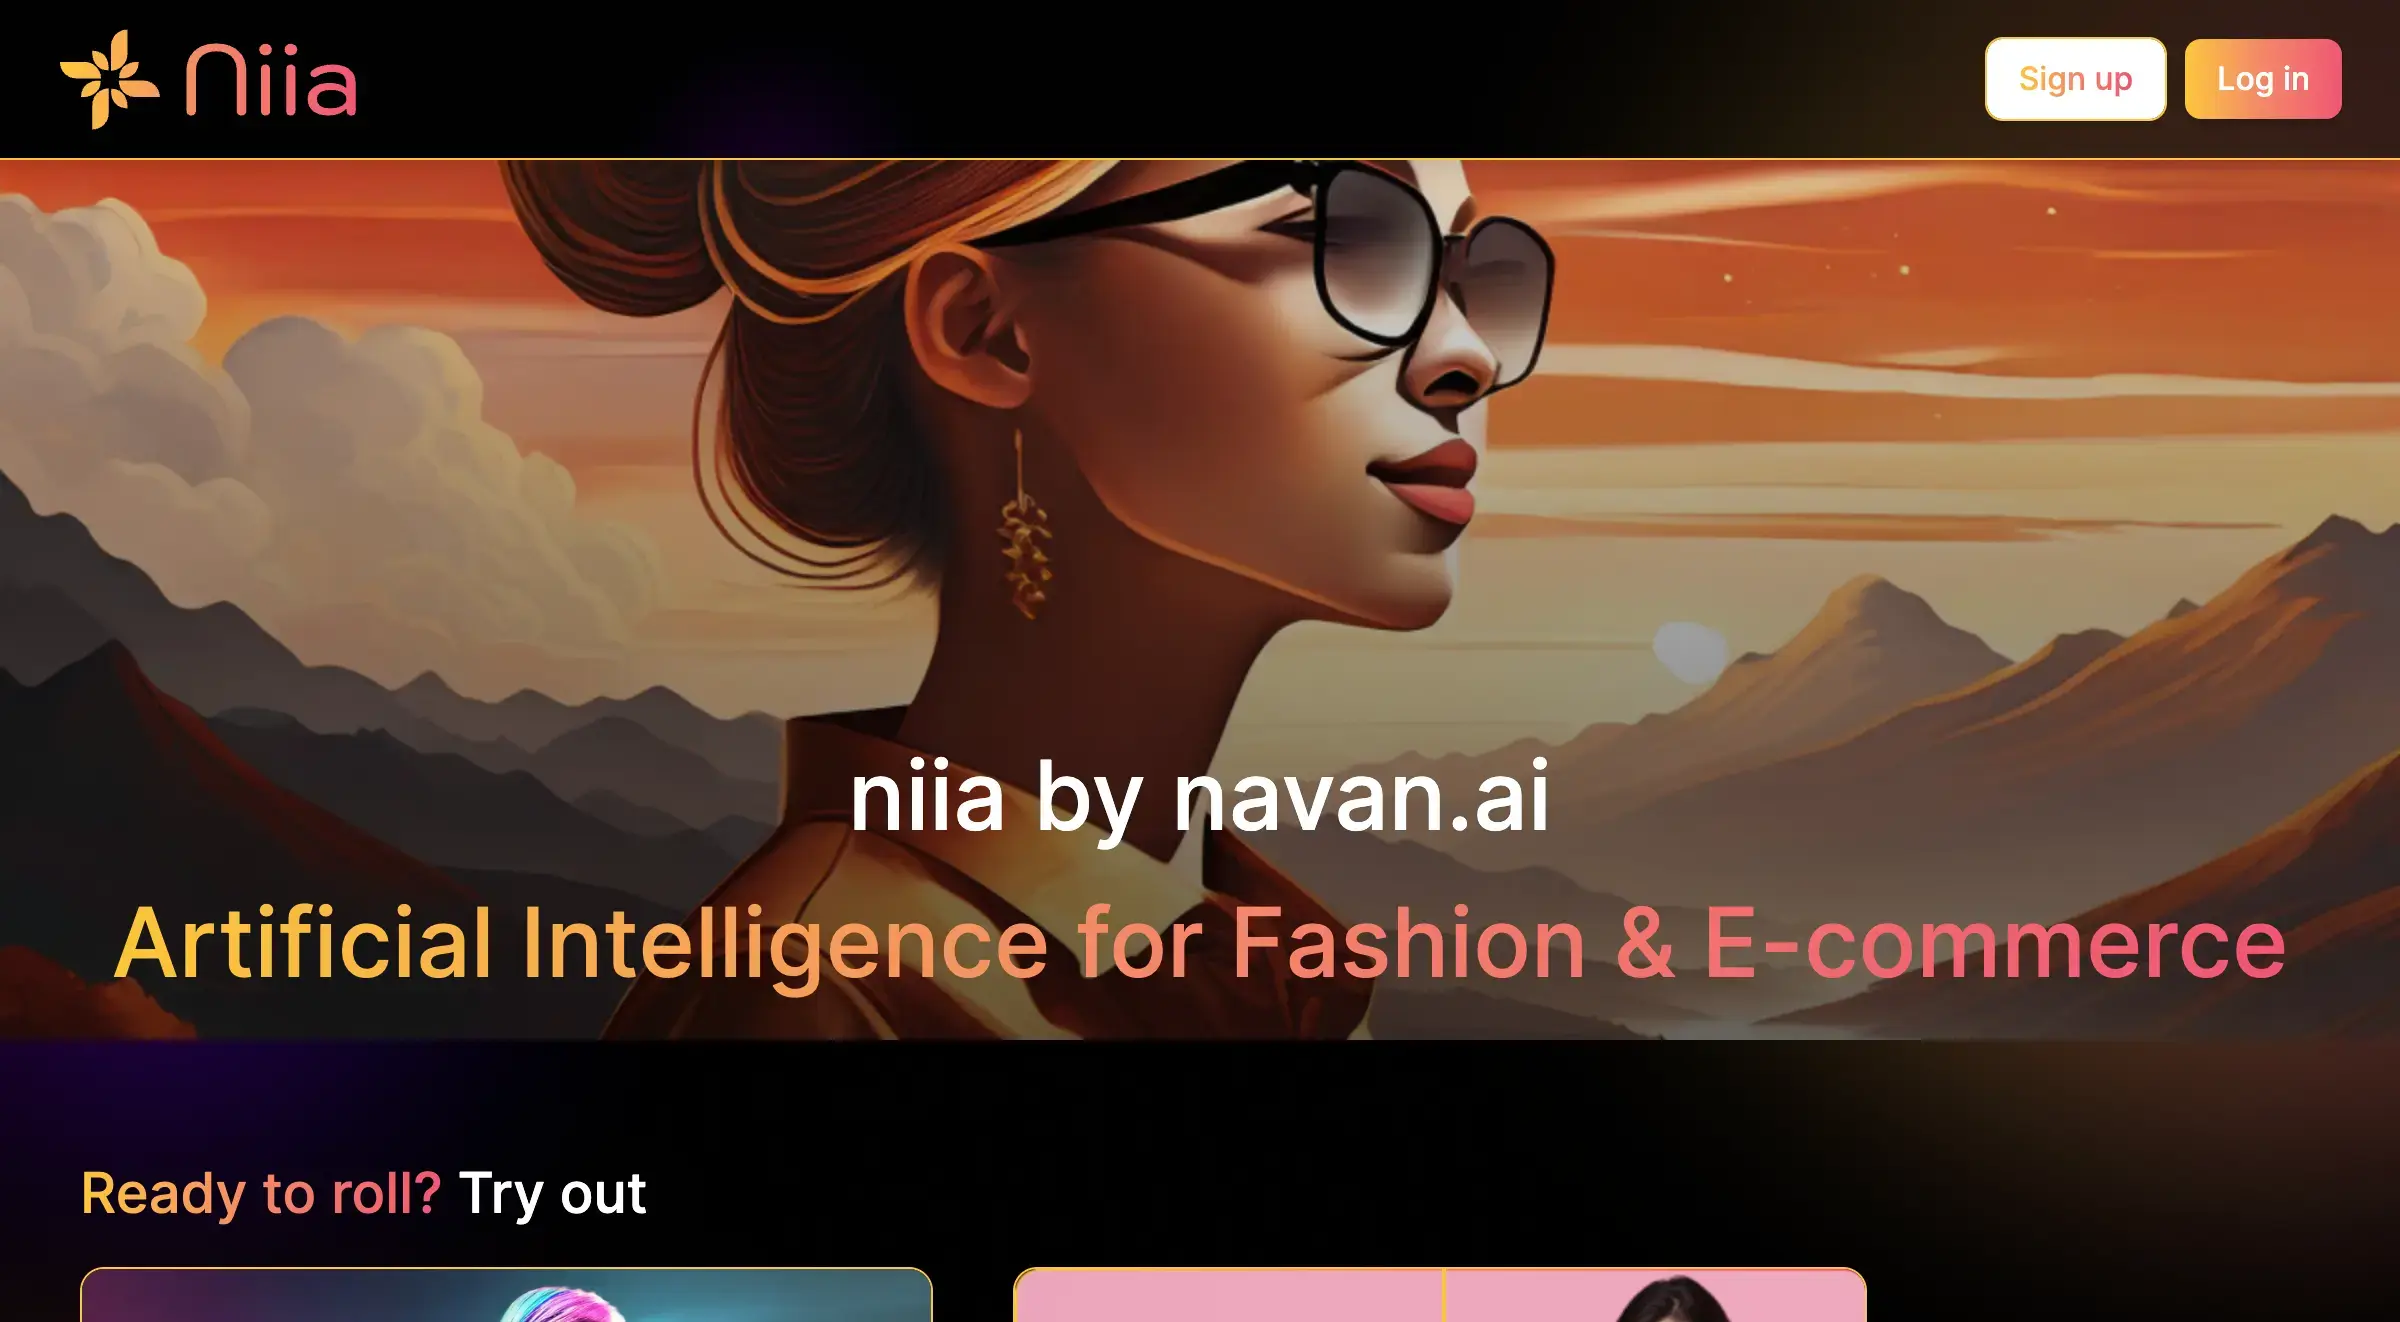 niia by navan.ai | Artificial Intelligence for Fashion & E-commerce